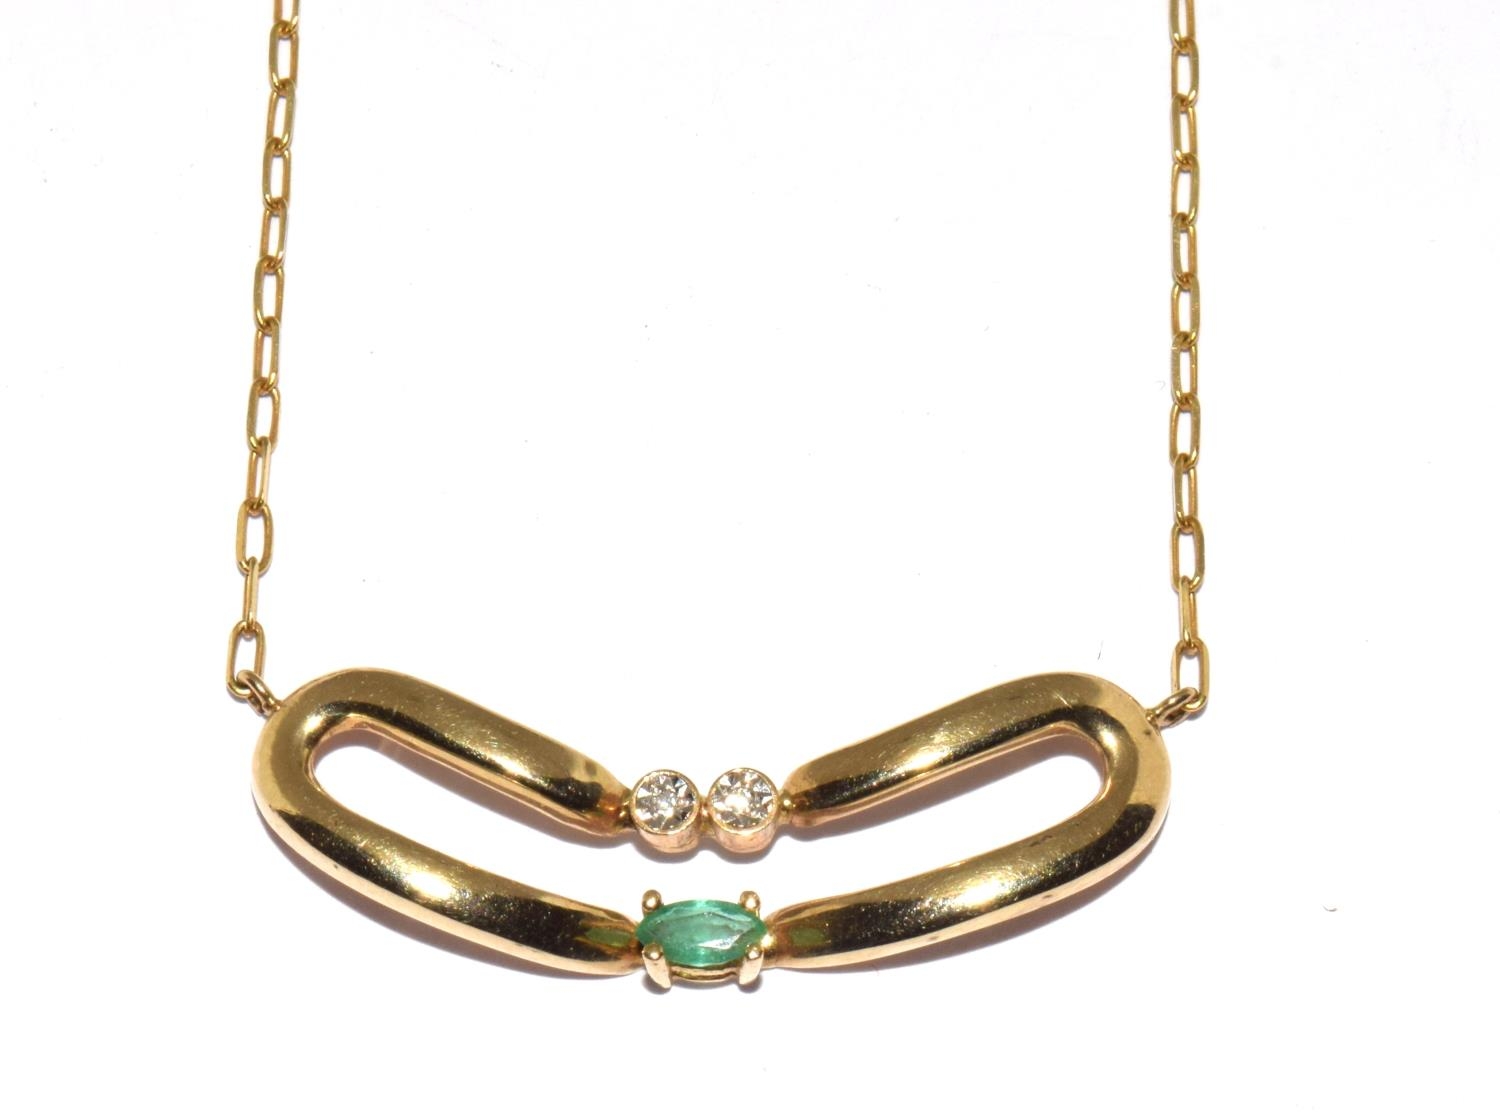 9ct gold diamond and Emerald wish bone pendant on a 14ct gold chain